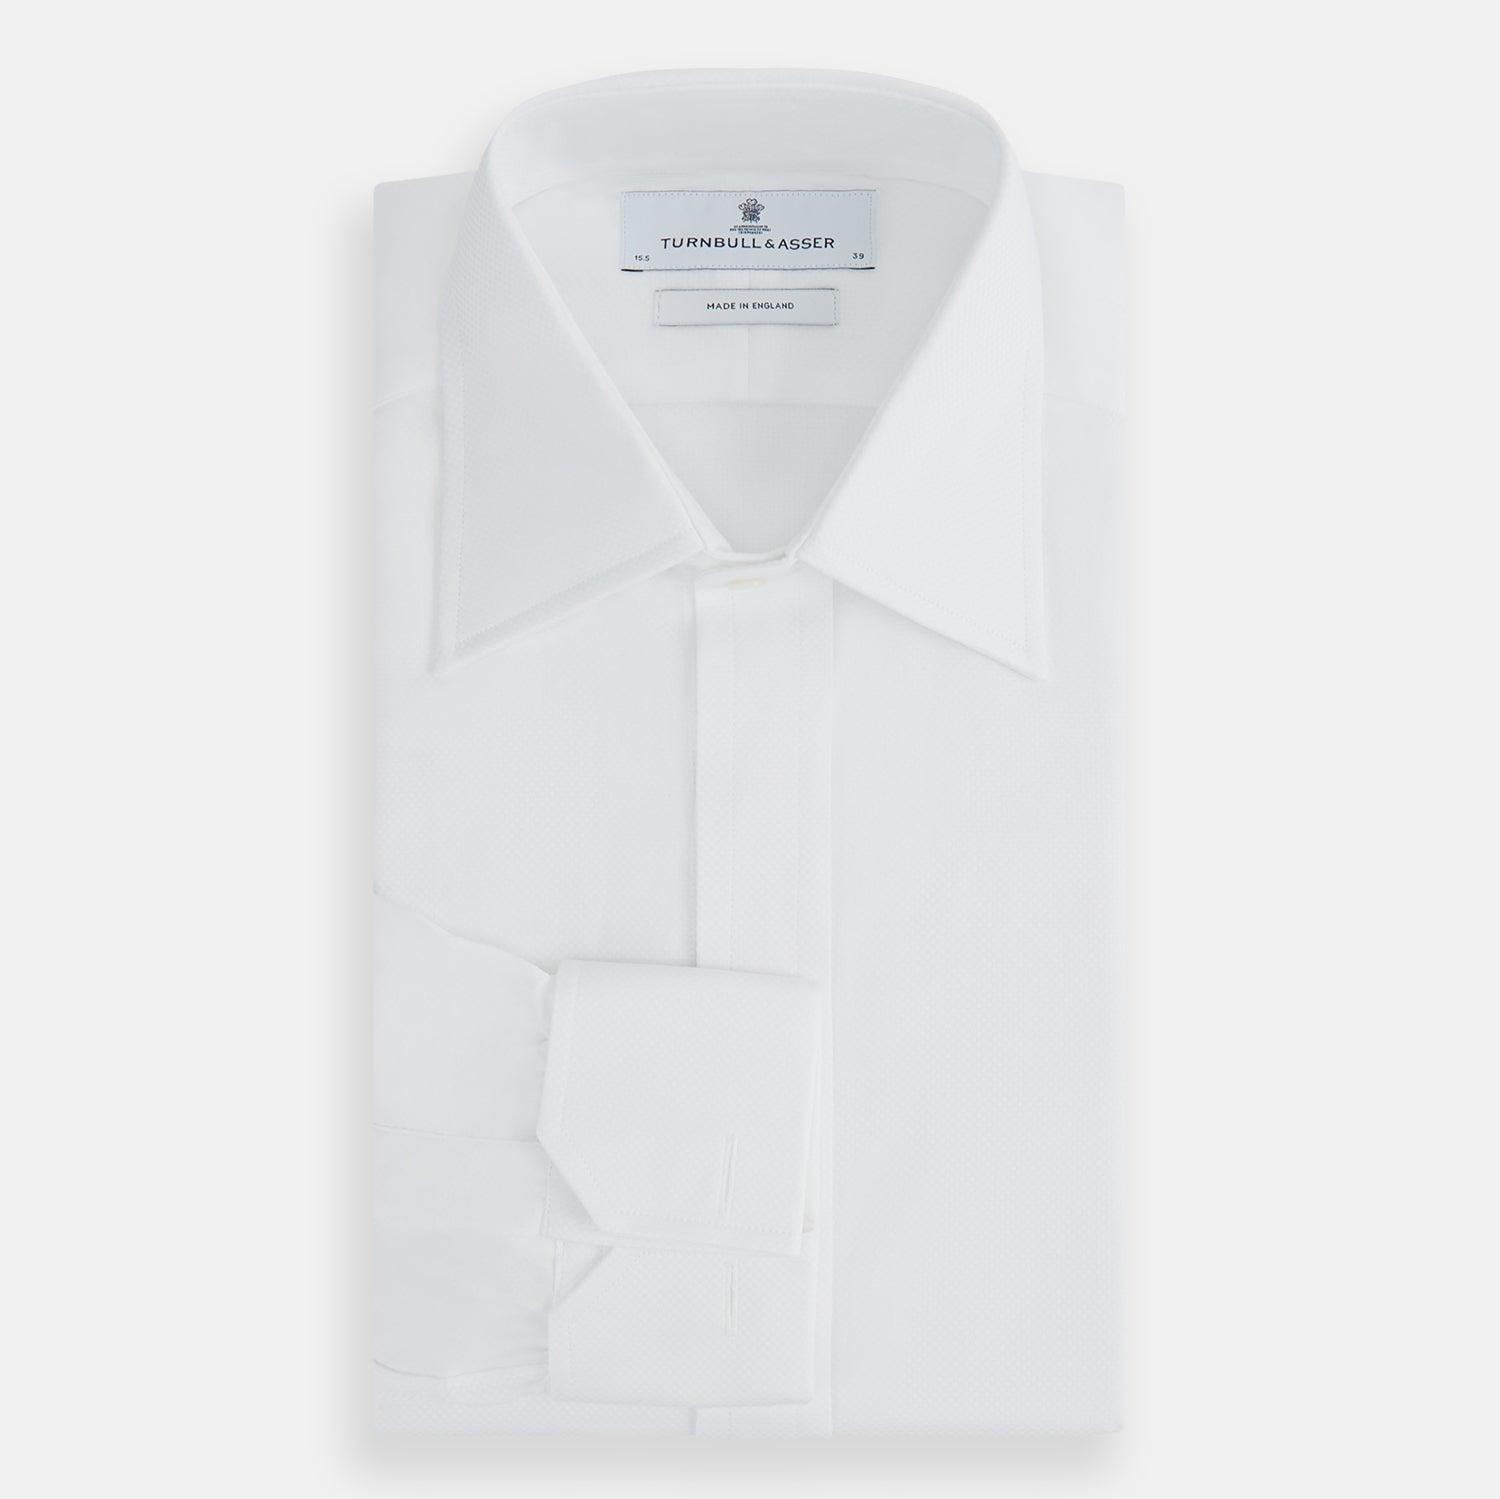 Casino Royale White Dress Shirt As Seen On James Bond